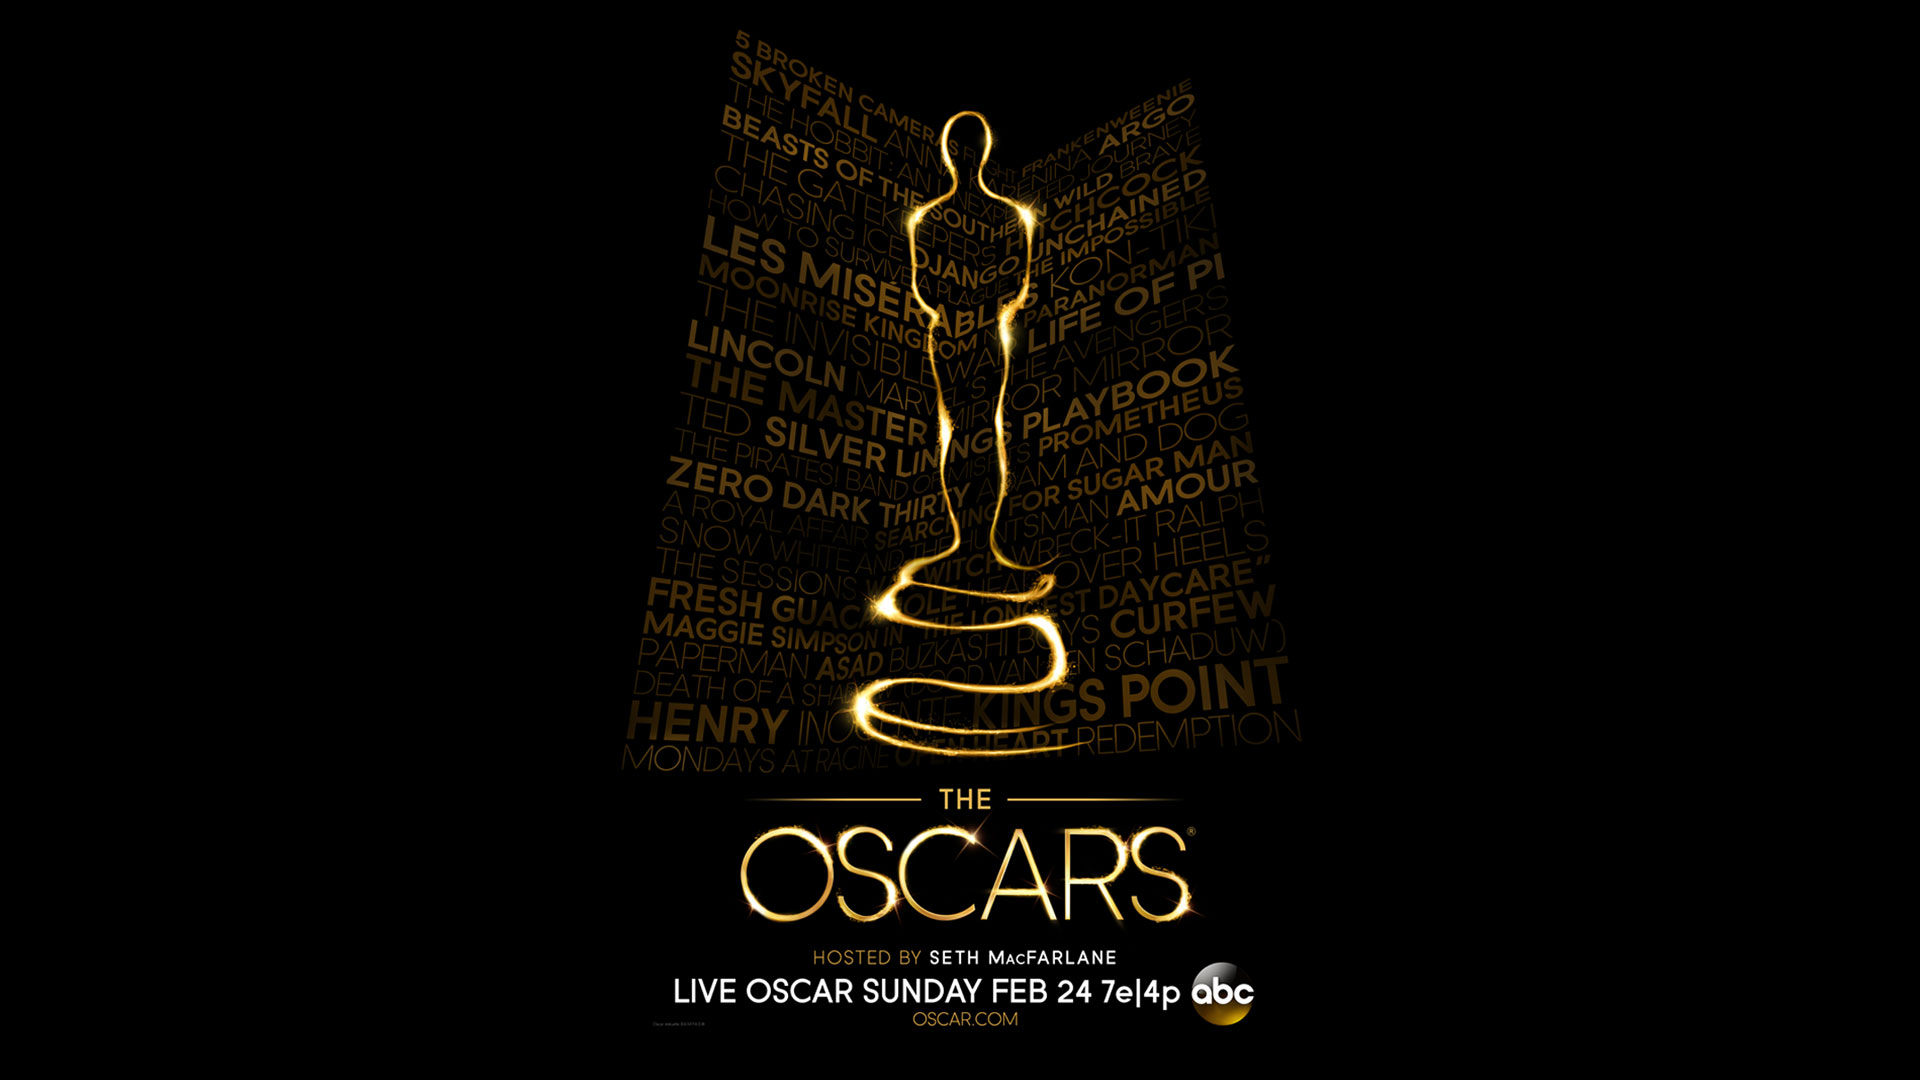 Oscars 2013 Live!